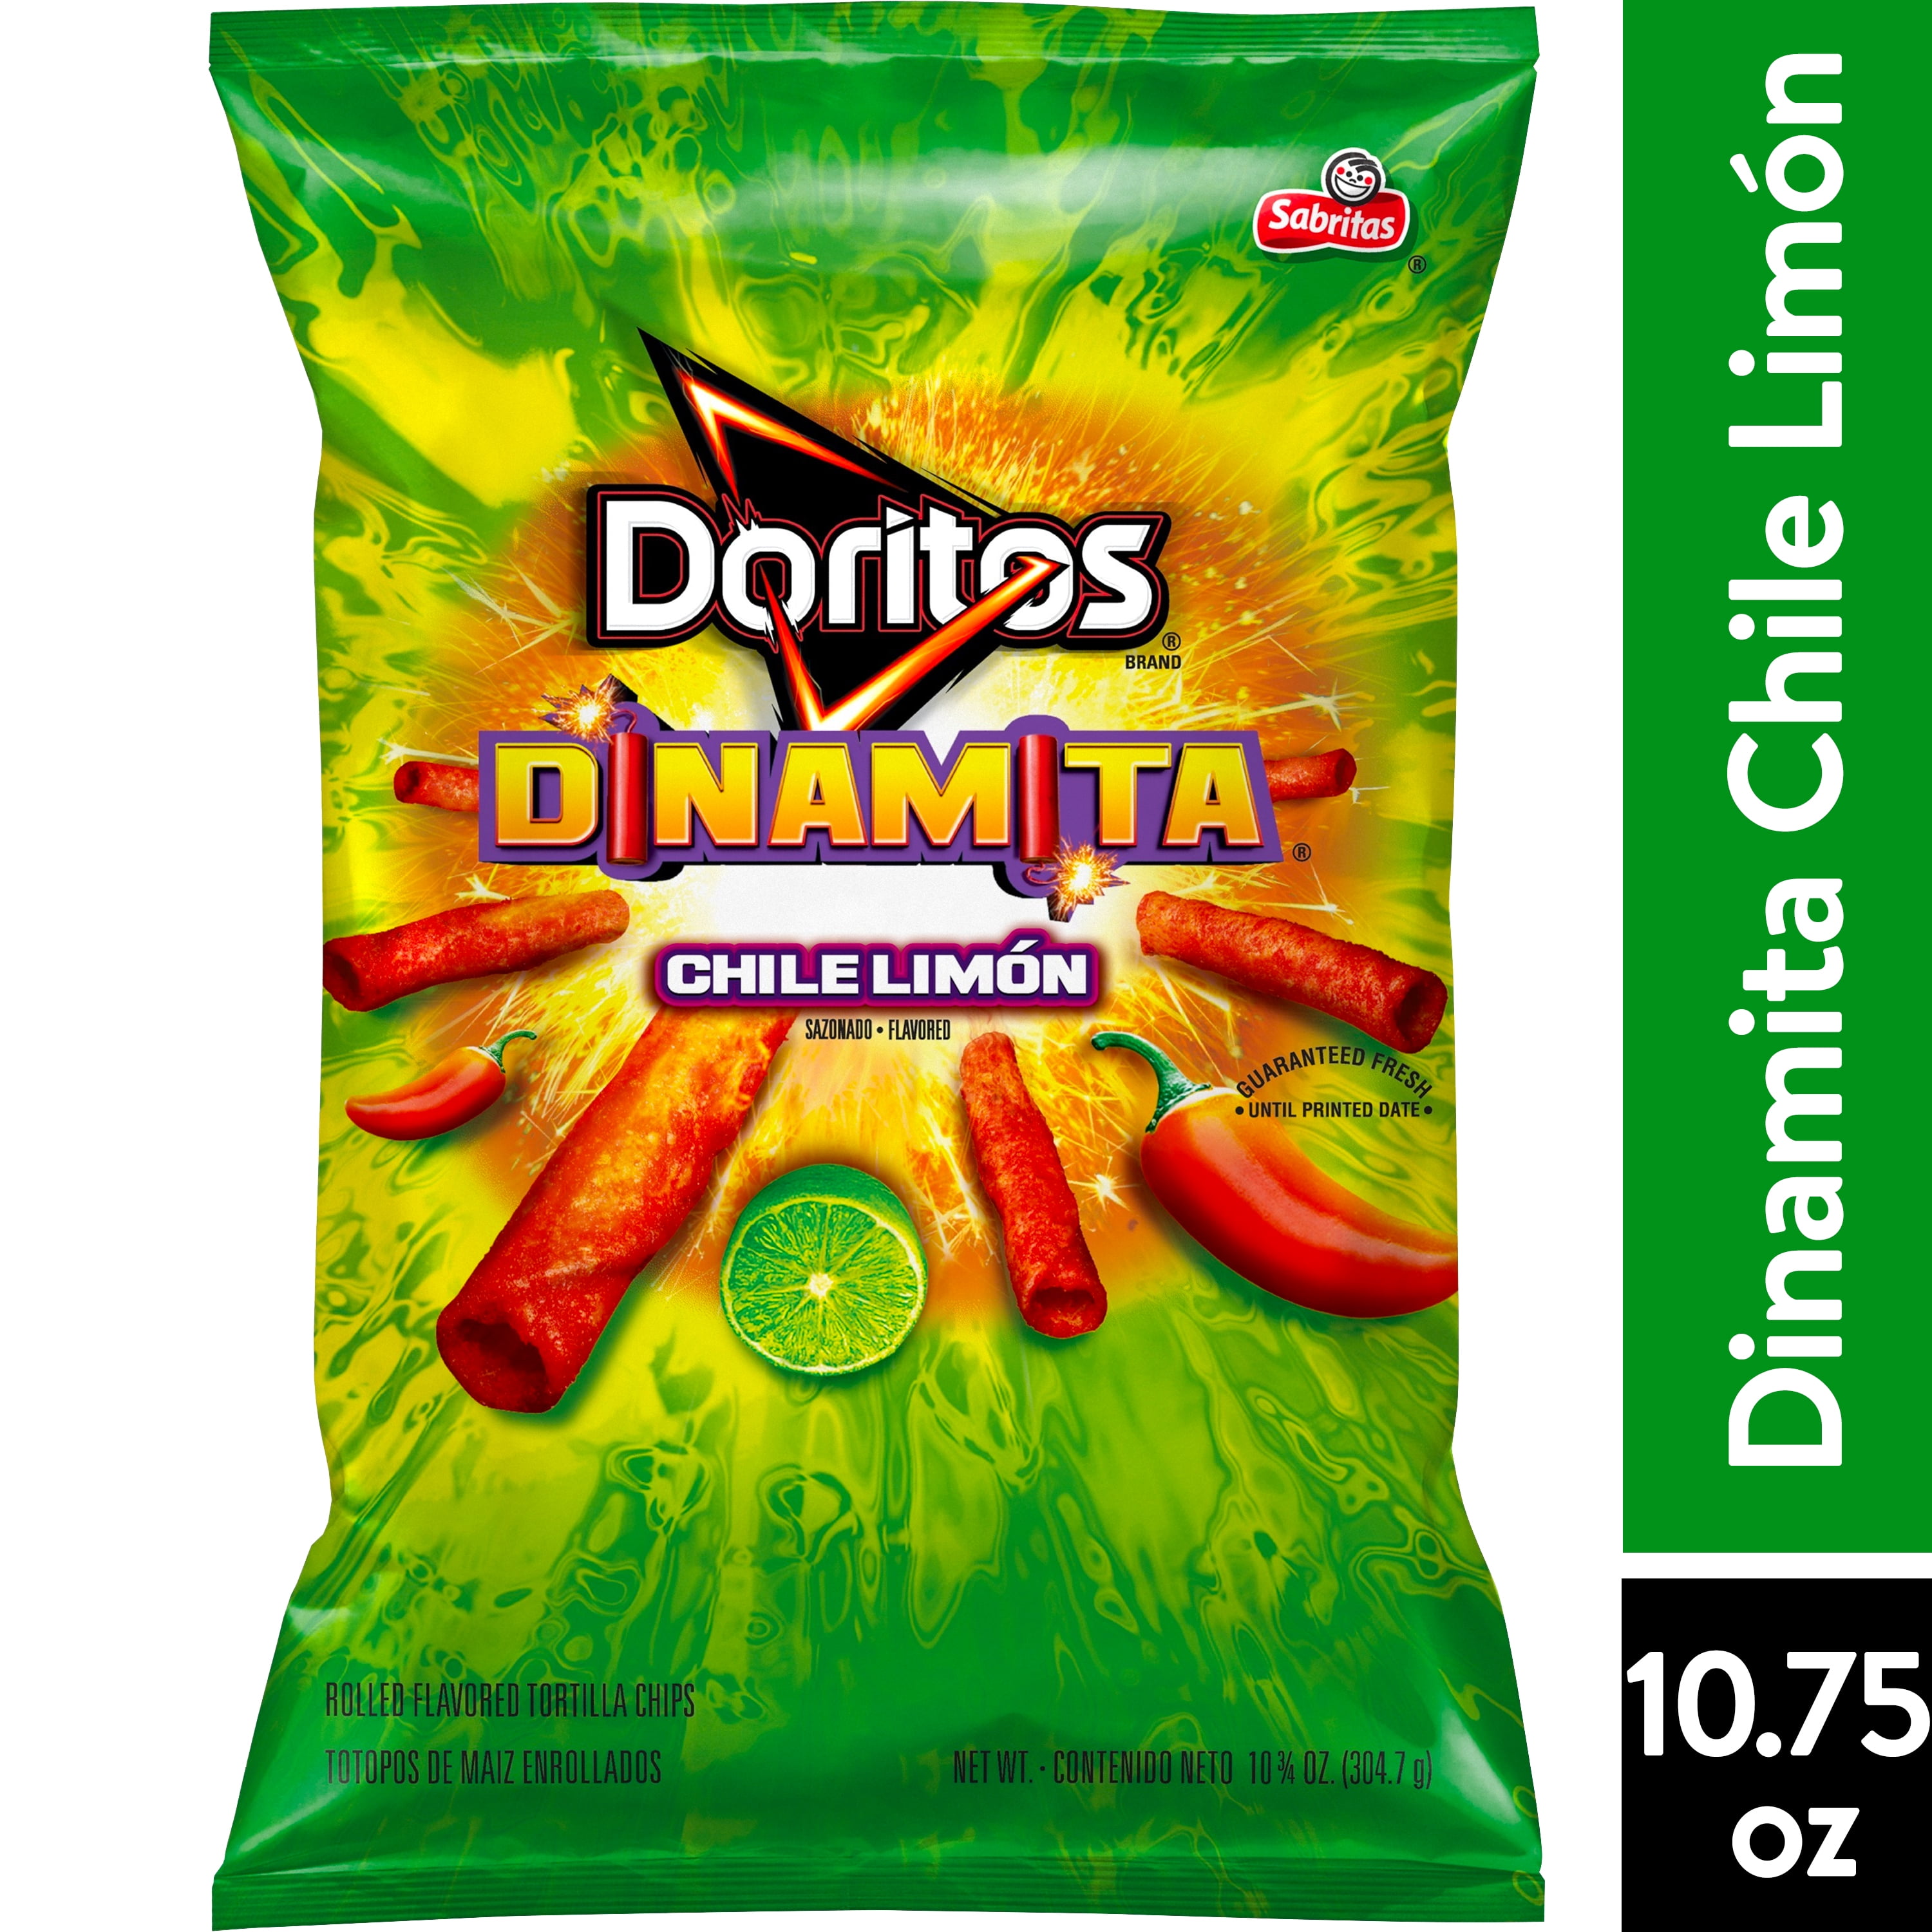 Doritos Dinamita Tortilla Chips Chile Limon, 10.75 oz - Walmart